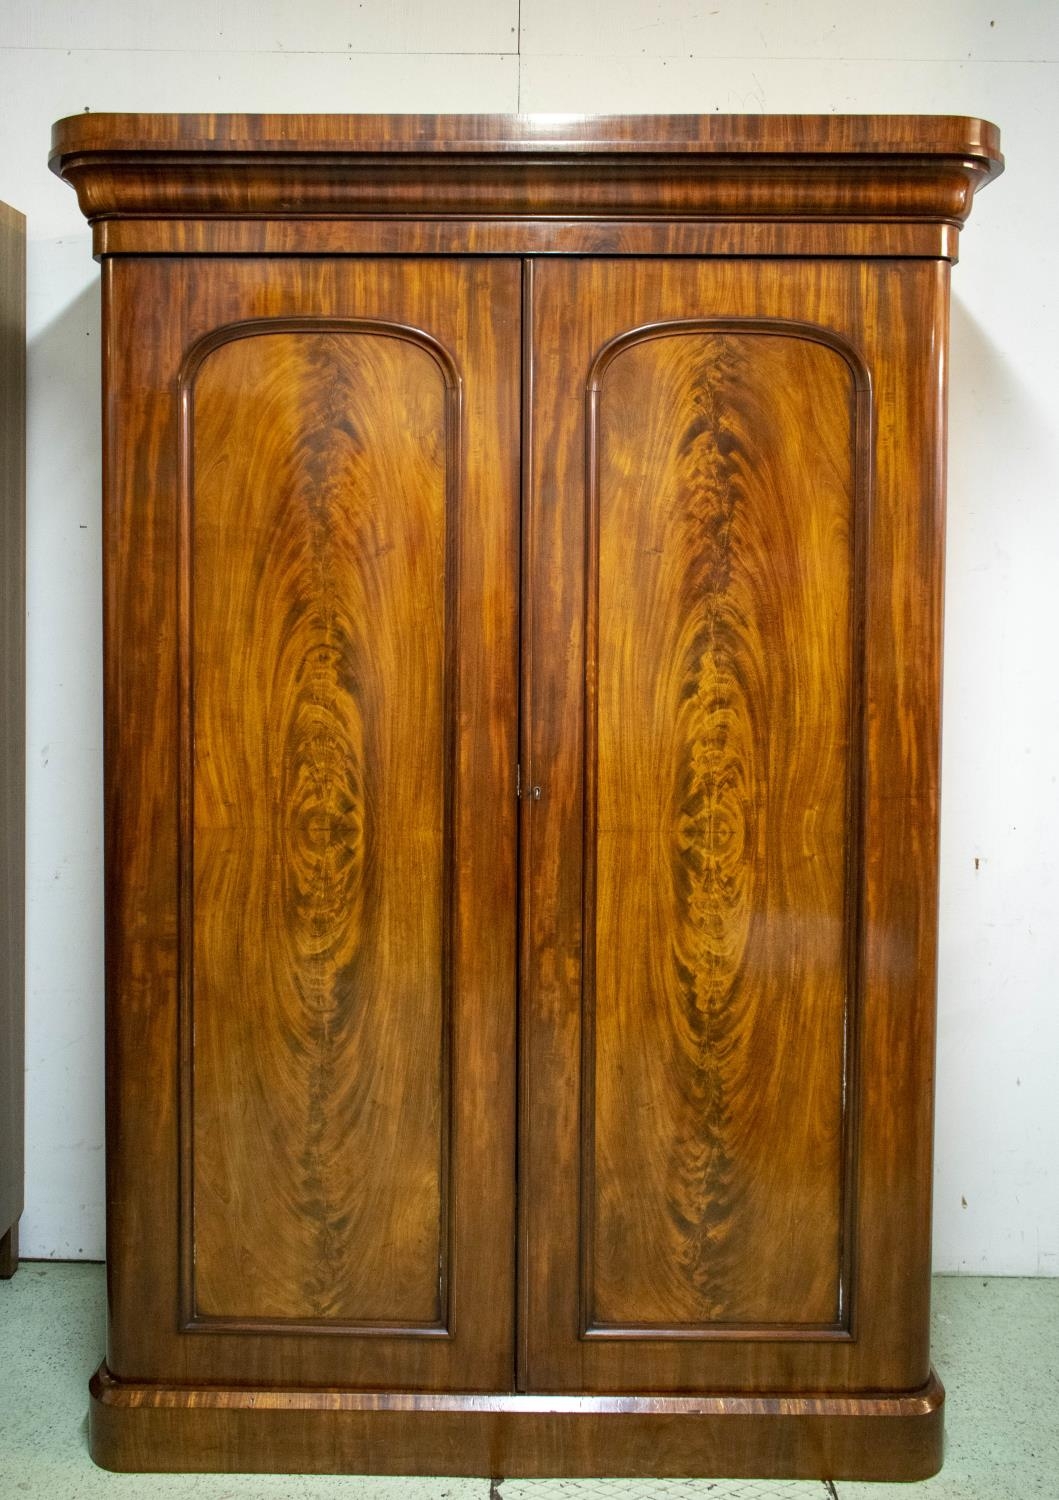 WARDROBE, 212cm H x 148cm x 63cm D, Victorian mahogany, circa 1870, with two doors, enclosing